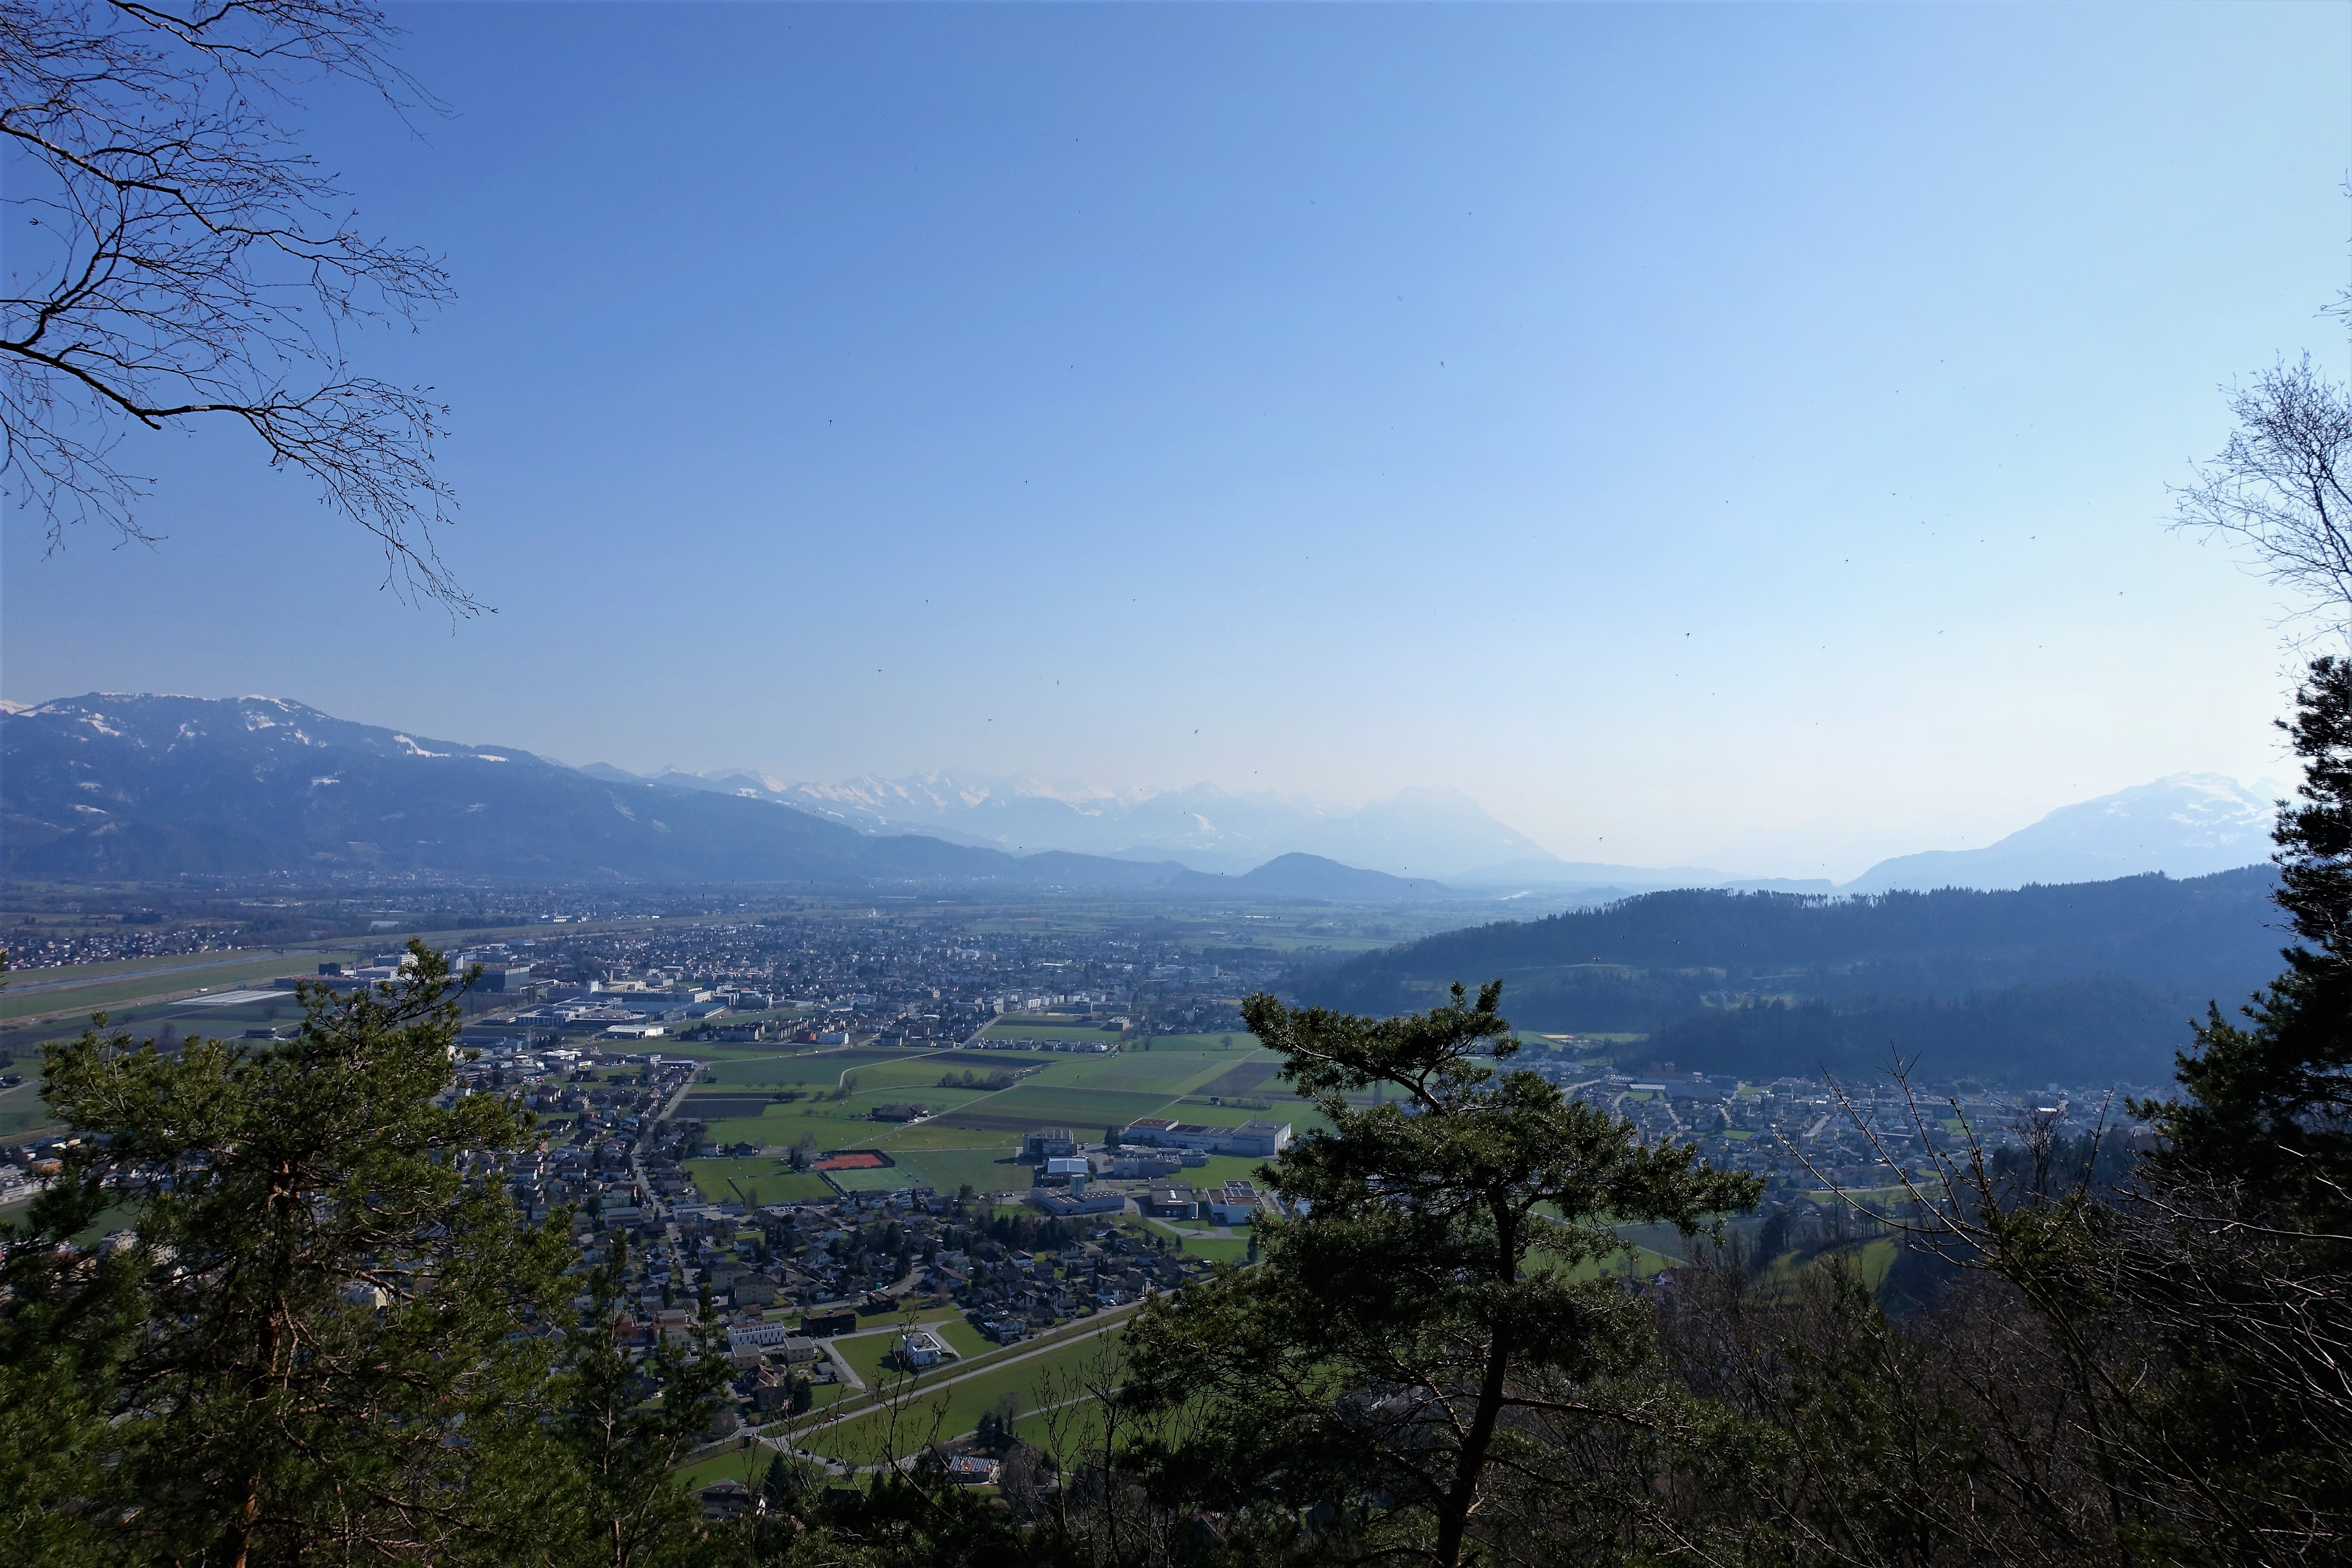 Views across the Rhine valley